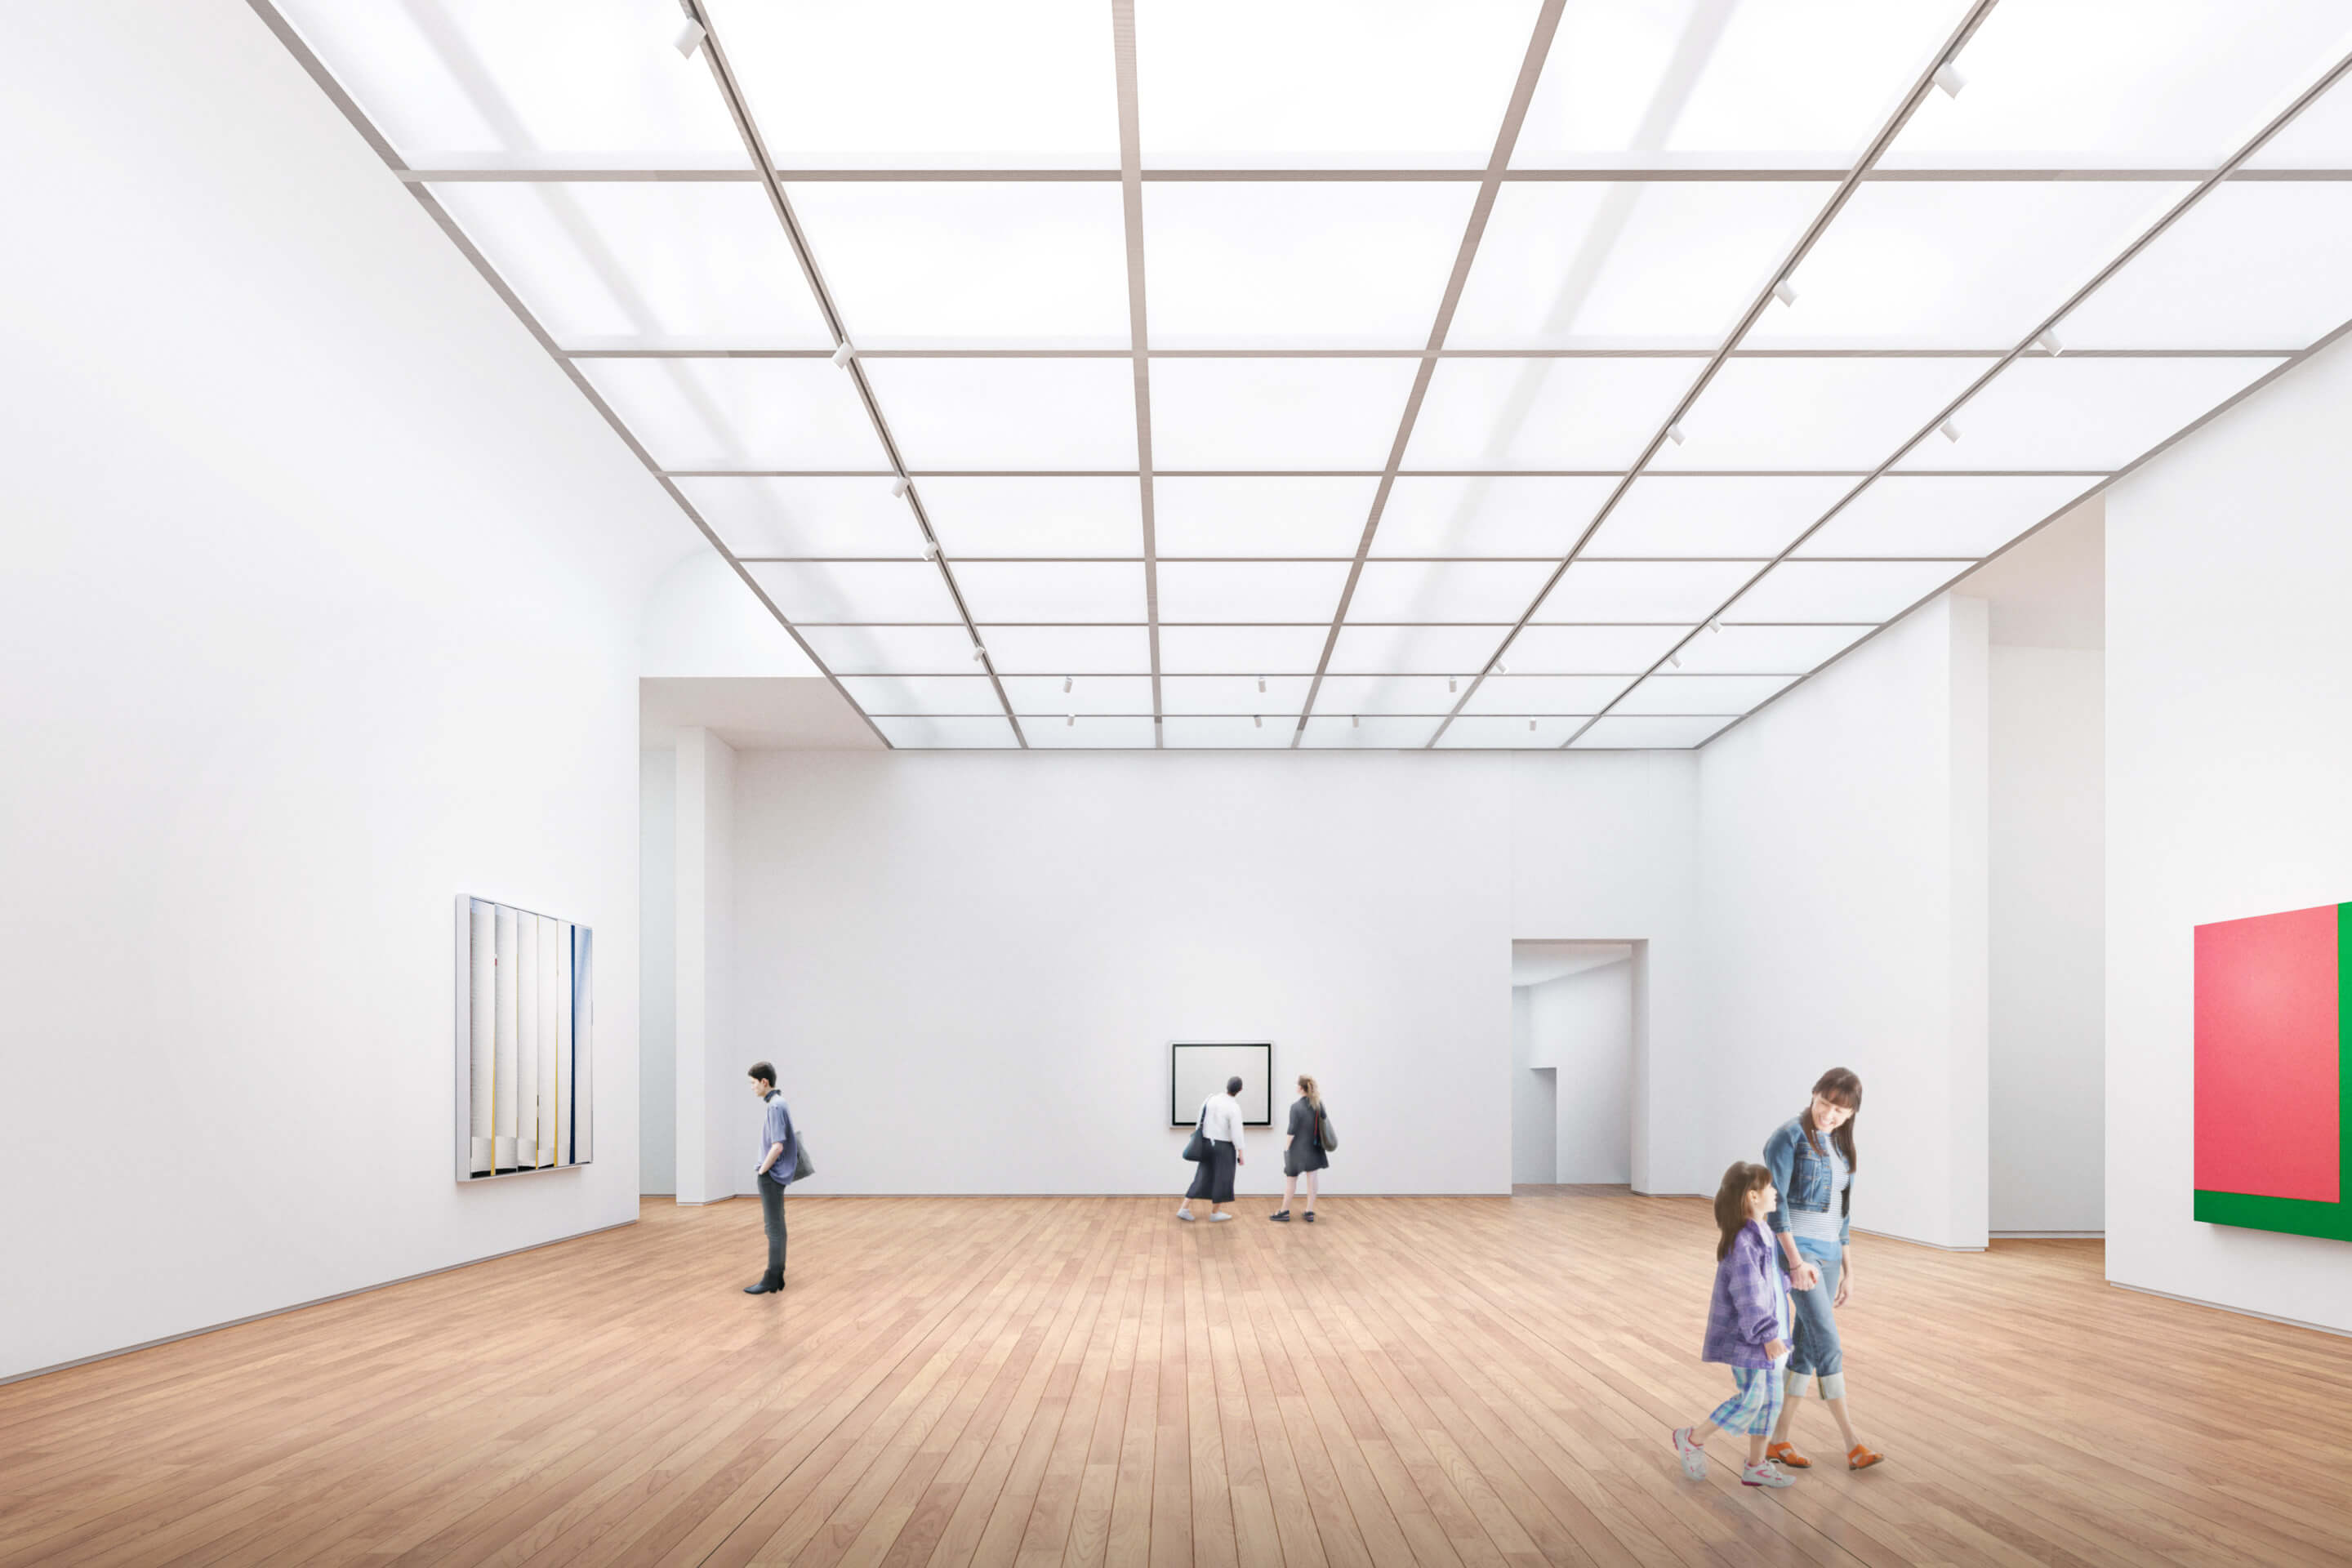 rendering of a museum gallery